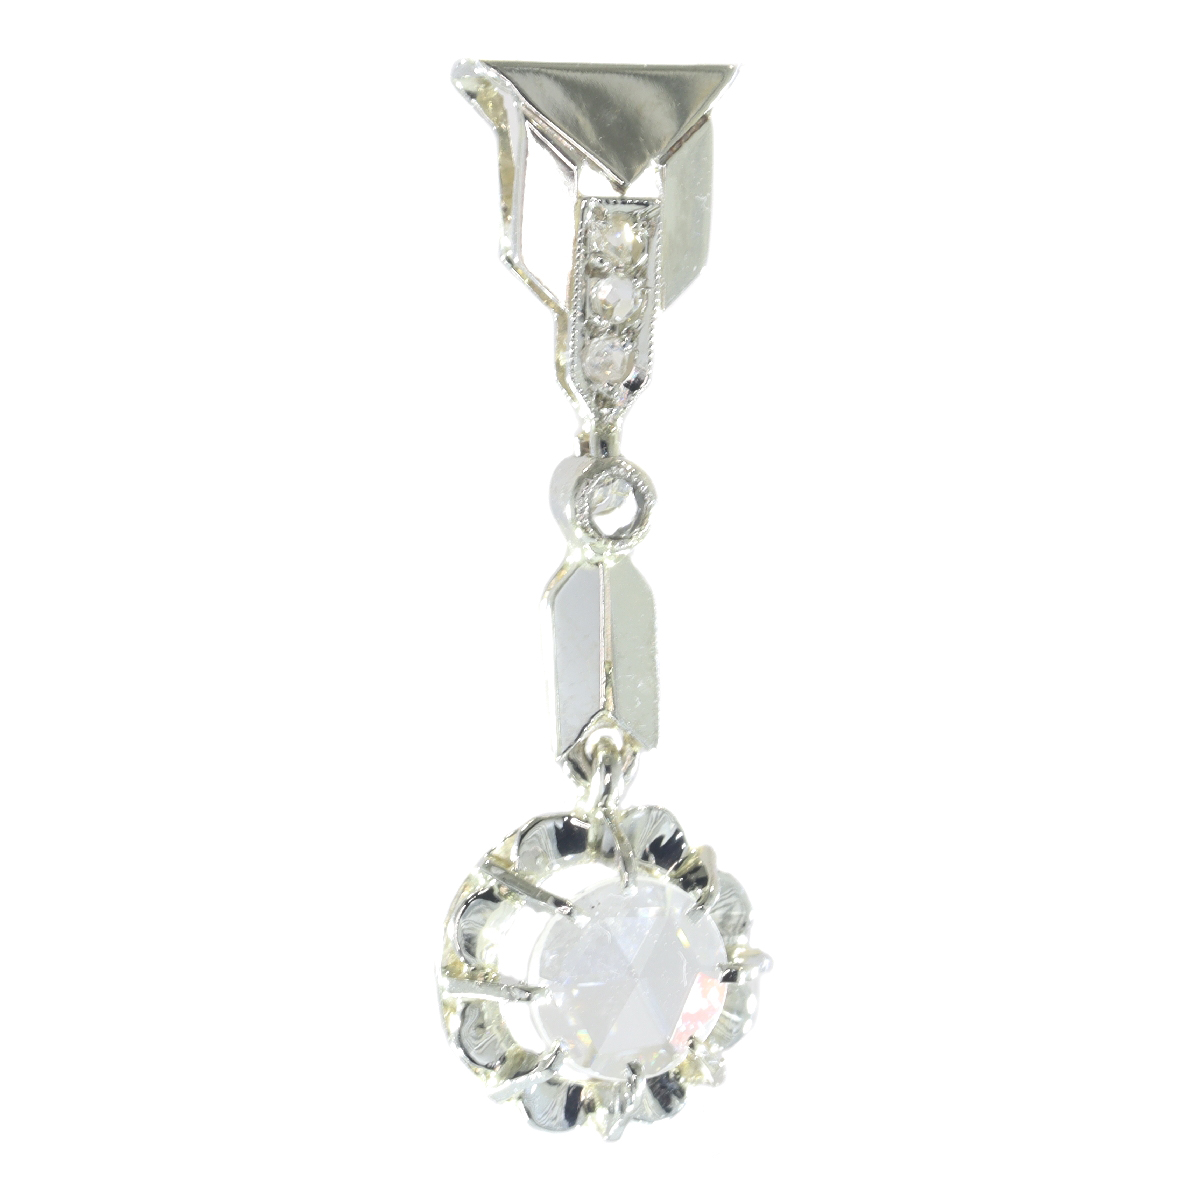 Vintage Art Deco large rose cut diamond pendant